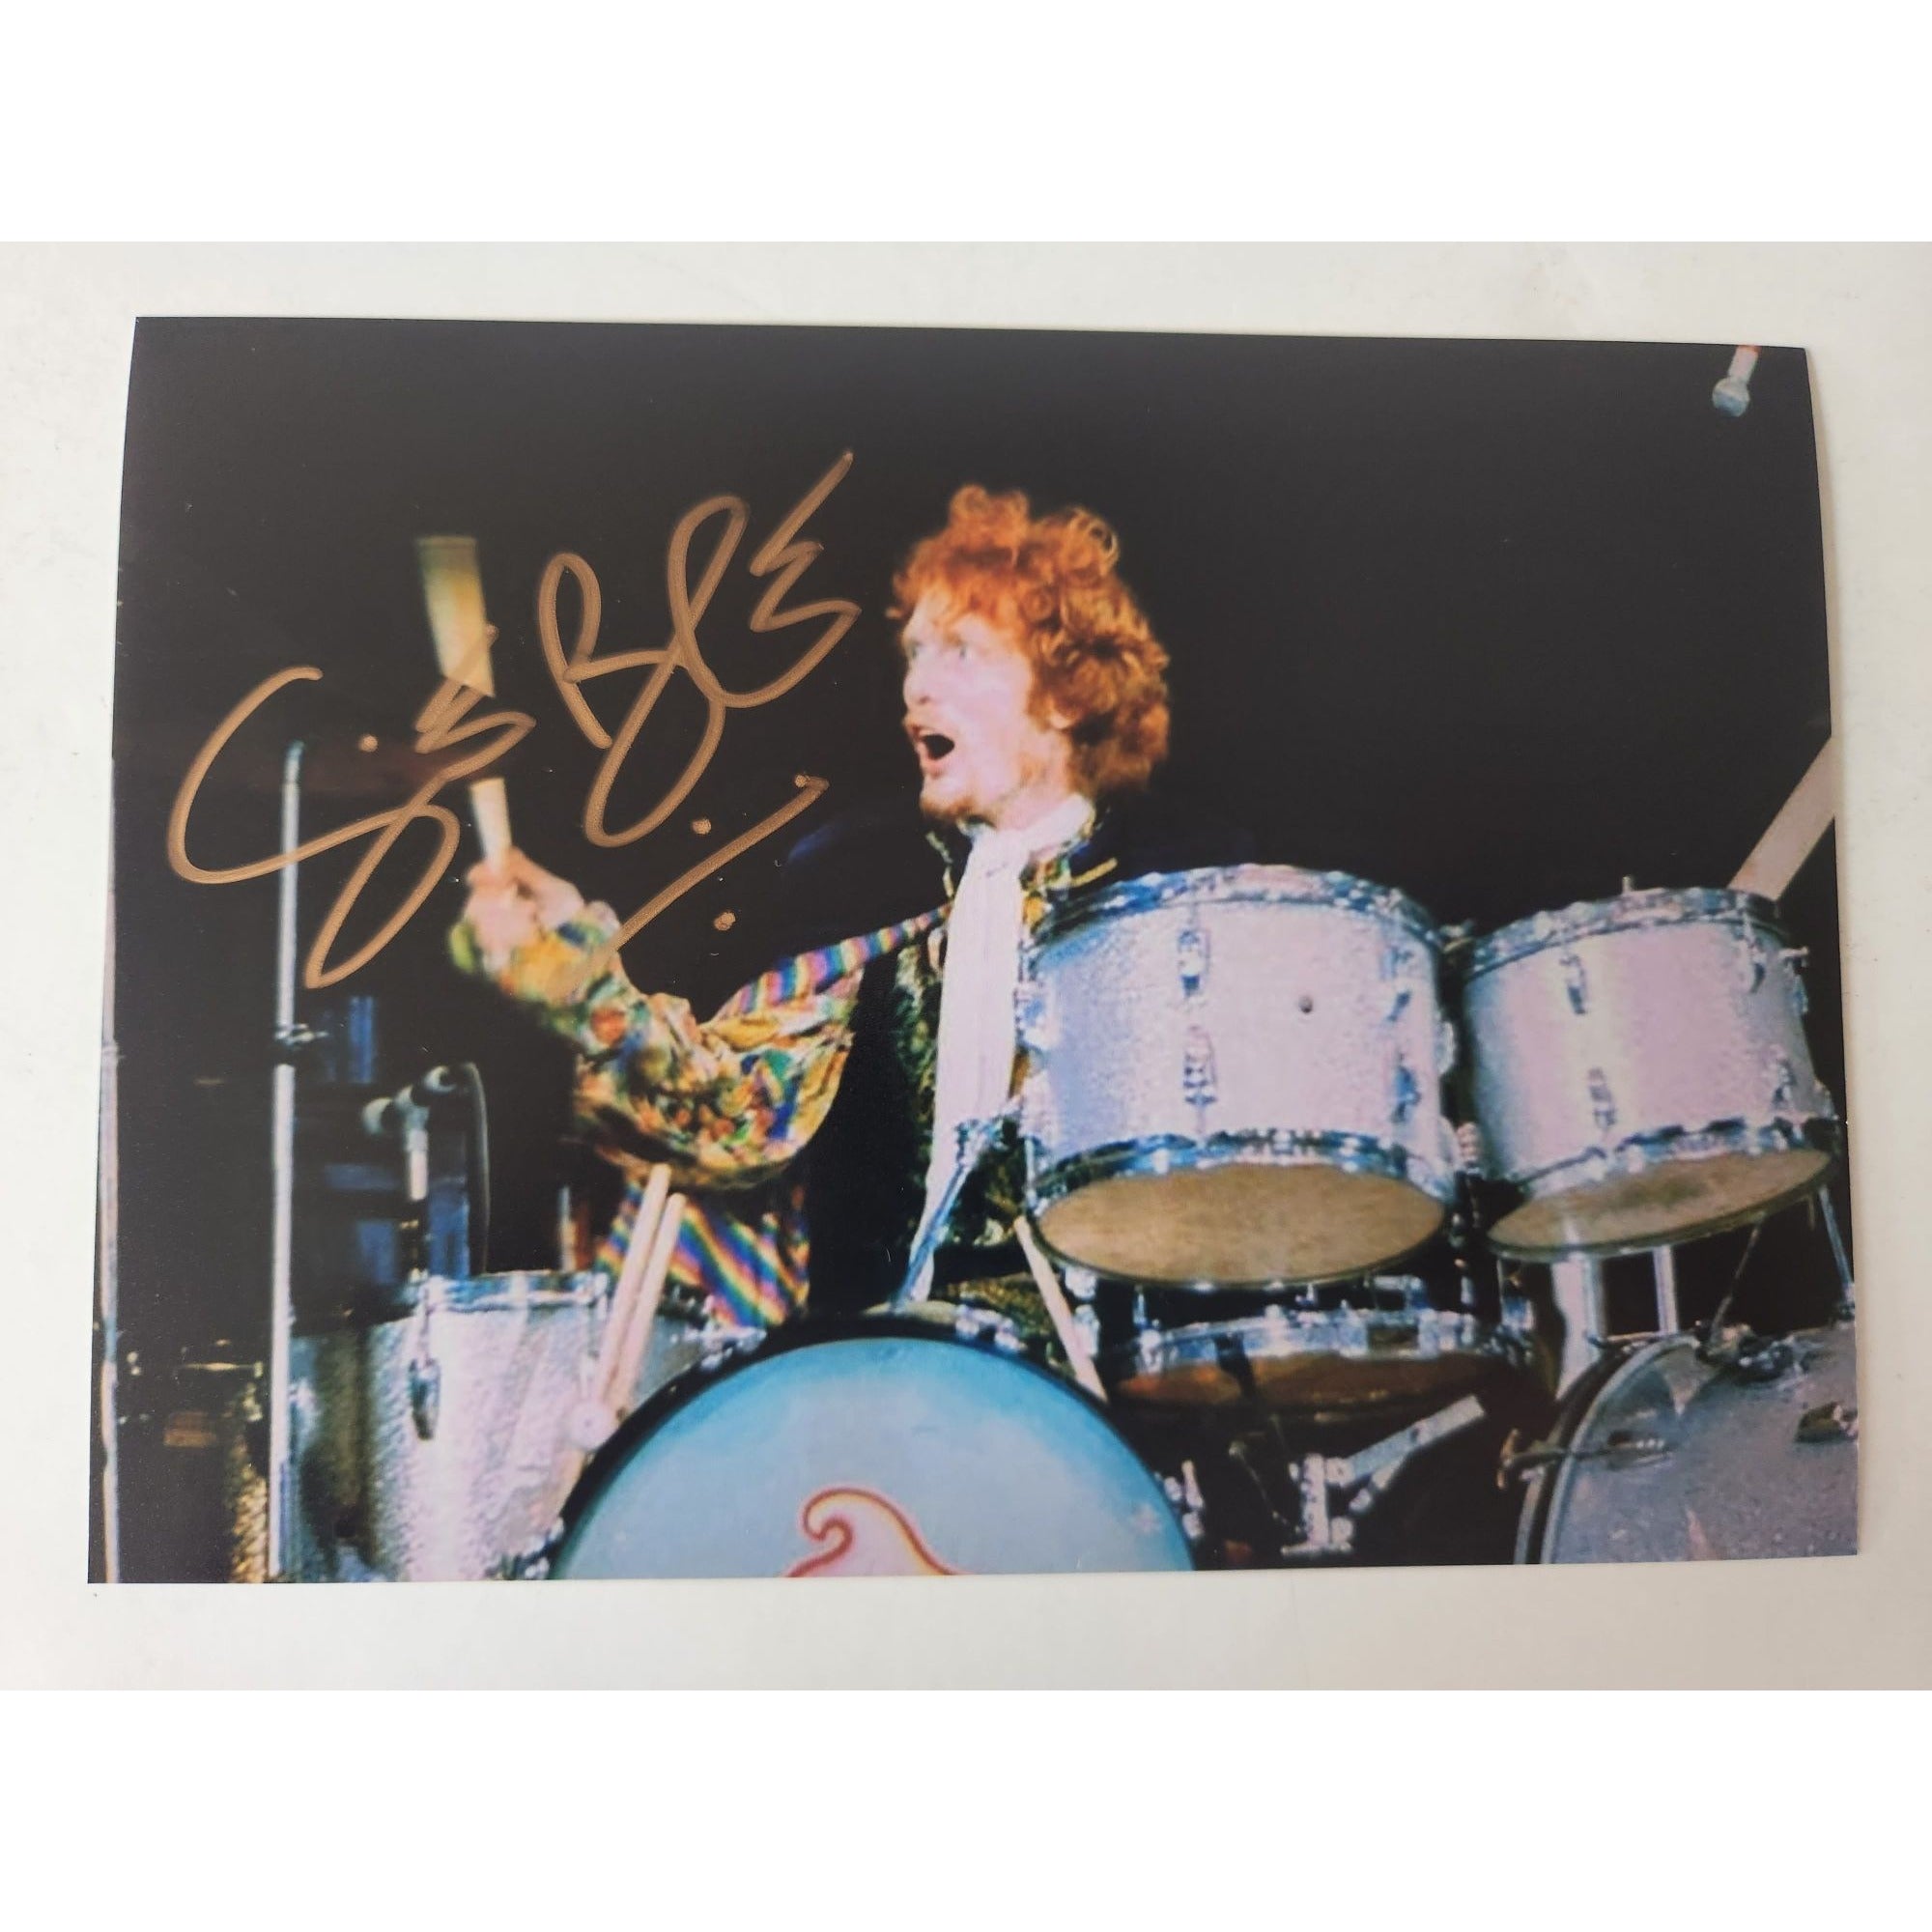 Ginger Baker legendary Cream drummer 5x7 photo signed with proof